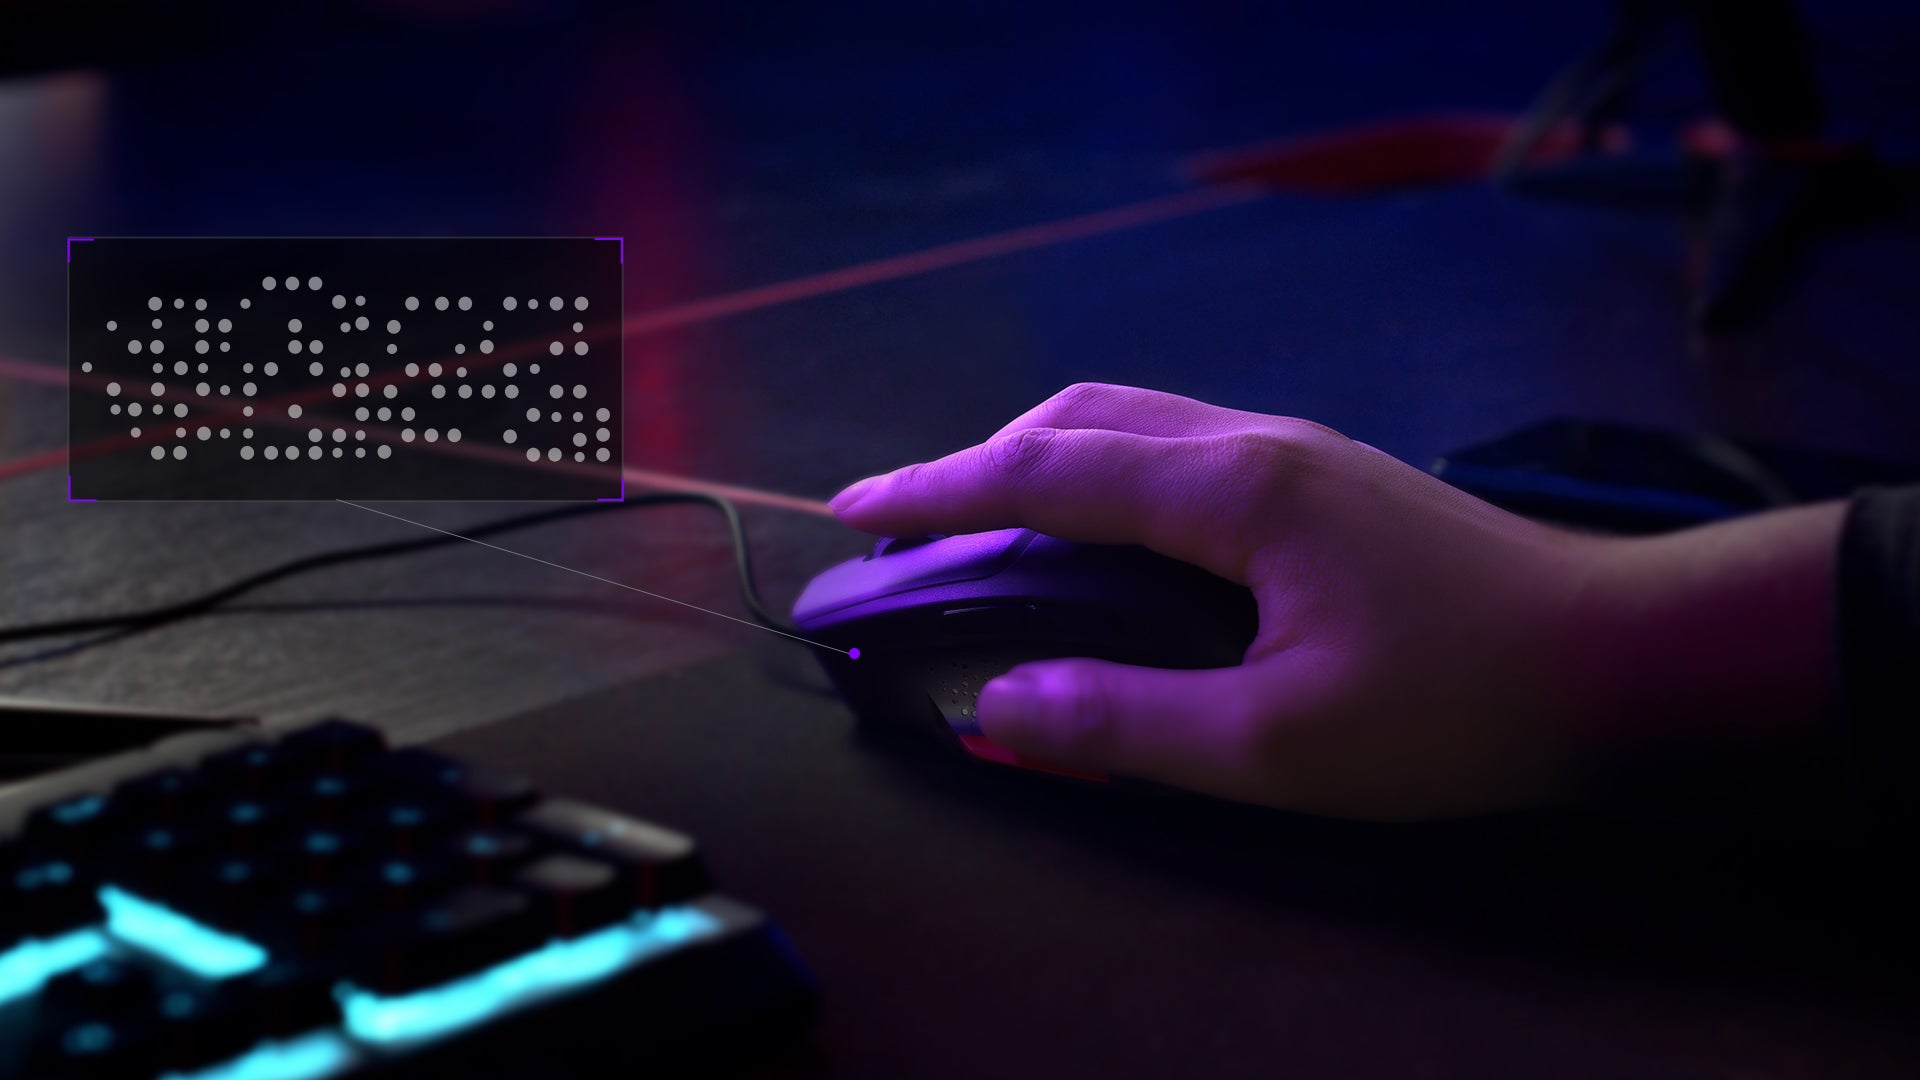 EKSA® EM600 RGB Advanced Wired Gaming Mouse